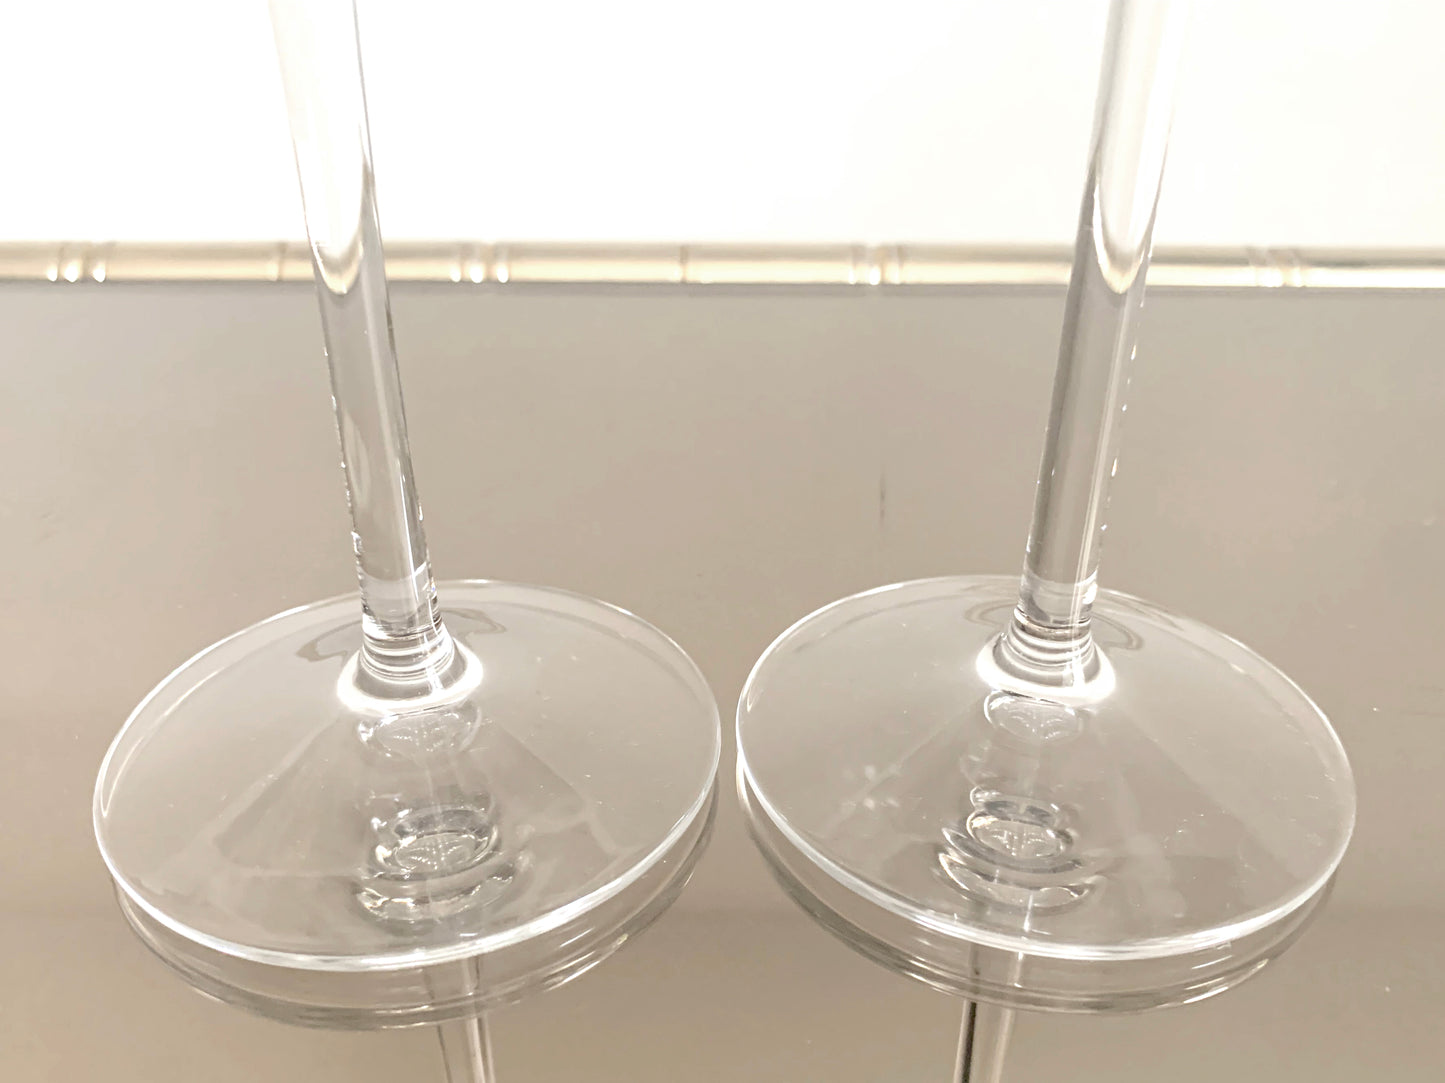 2 x MUMM Napa Champagne Flute Glasses / Excellent Condition / Napa Valley - USA